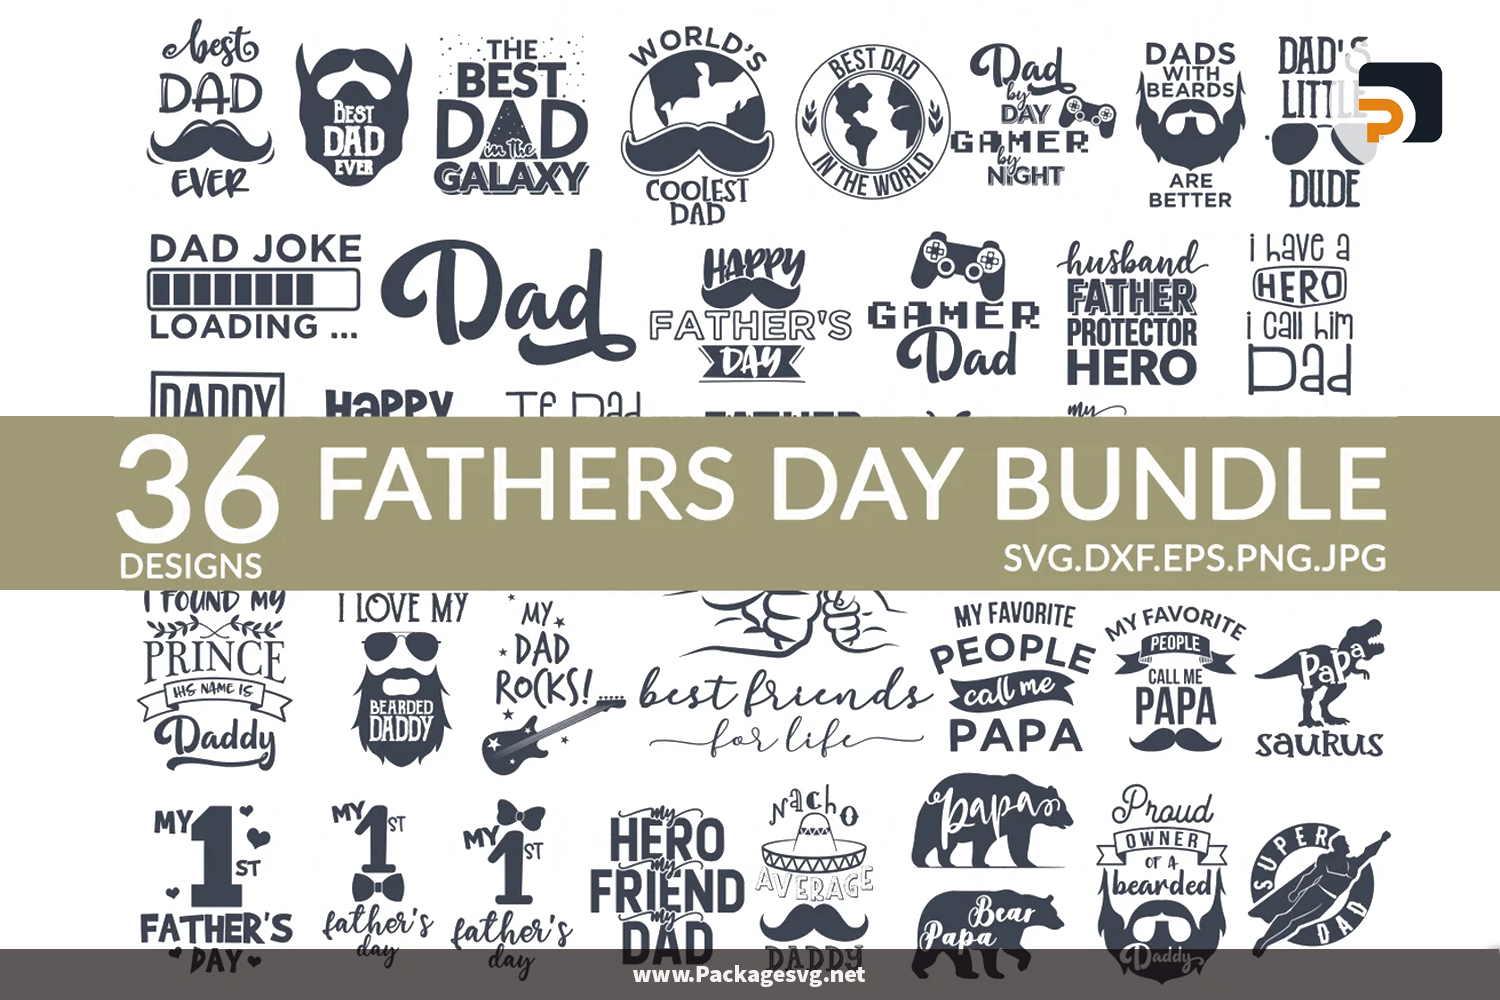 Fathers Day SVG Bundle